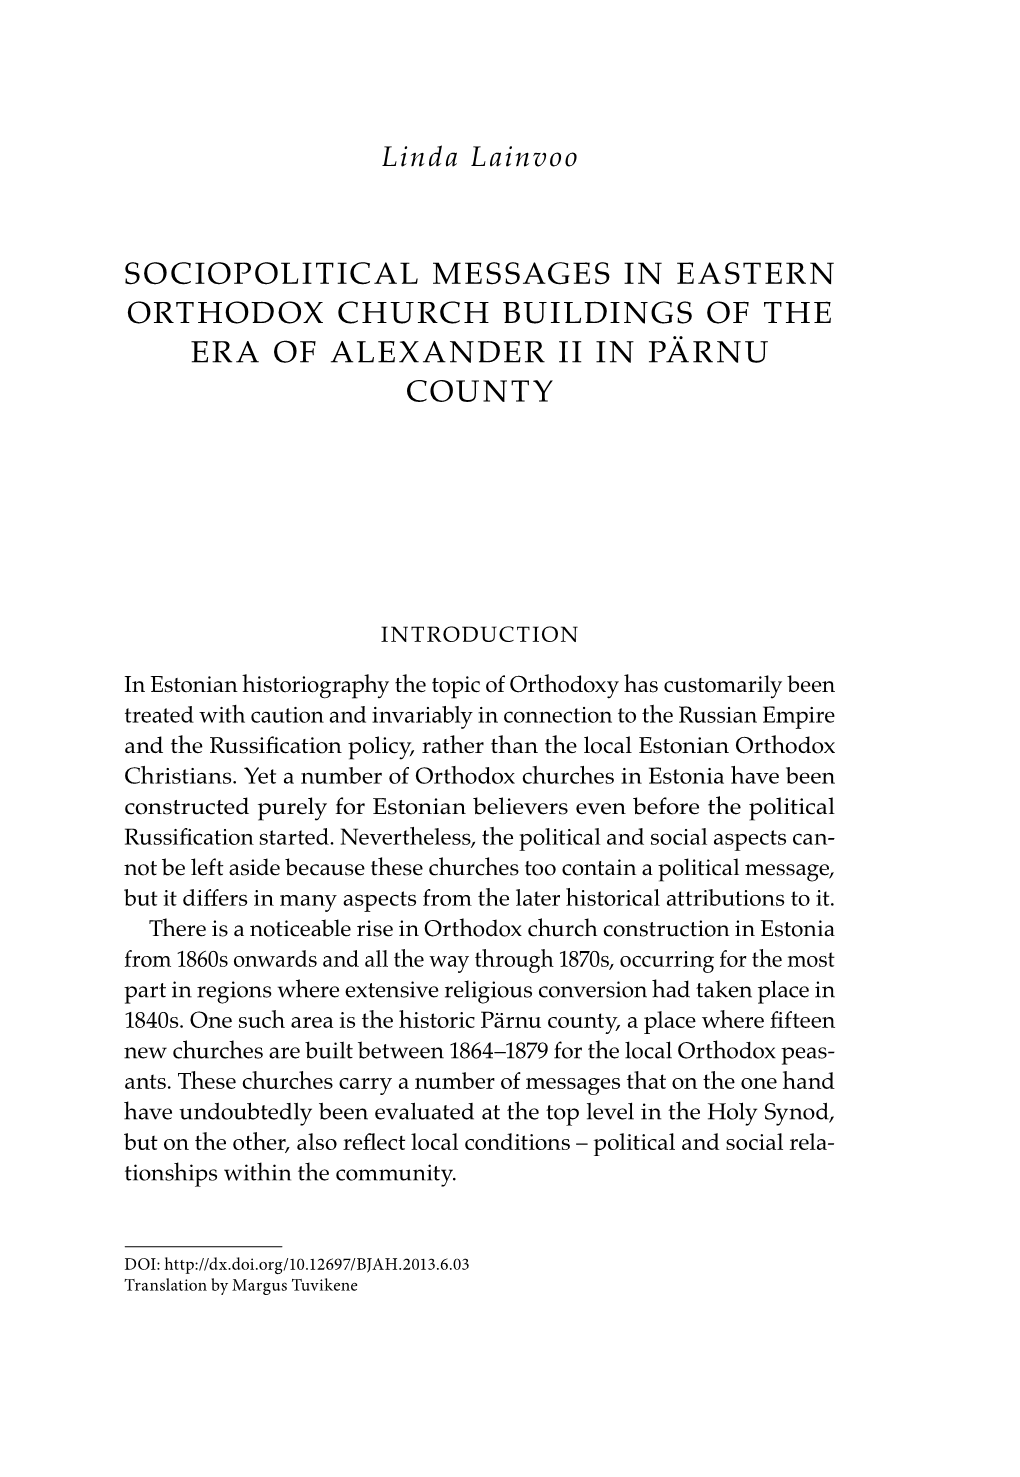 Sociopolitical Messages in Eastern Orthodox Church Buildings of the Era of Alexander II in Pärnu County